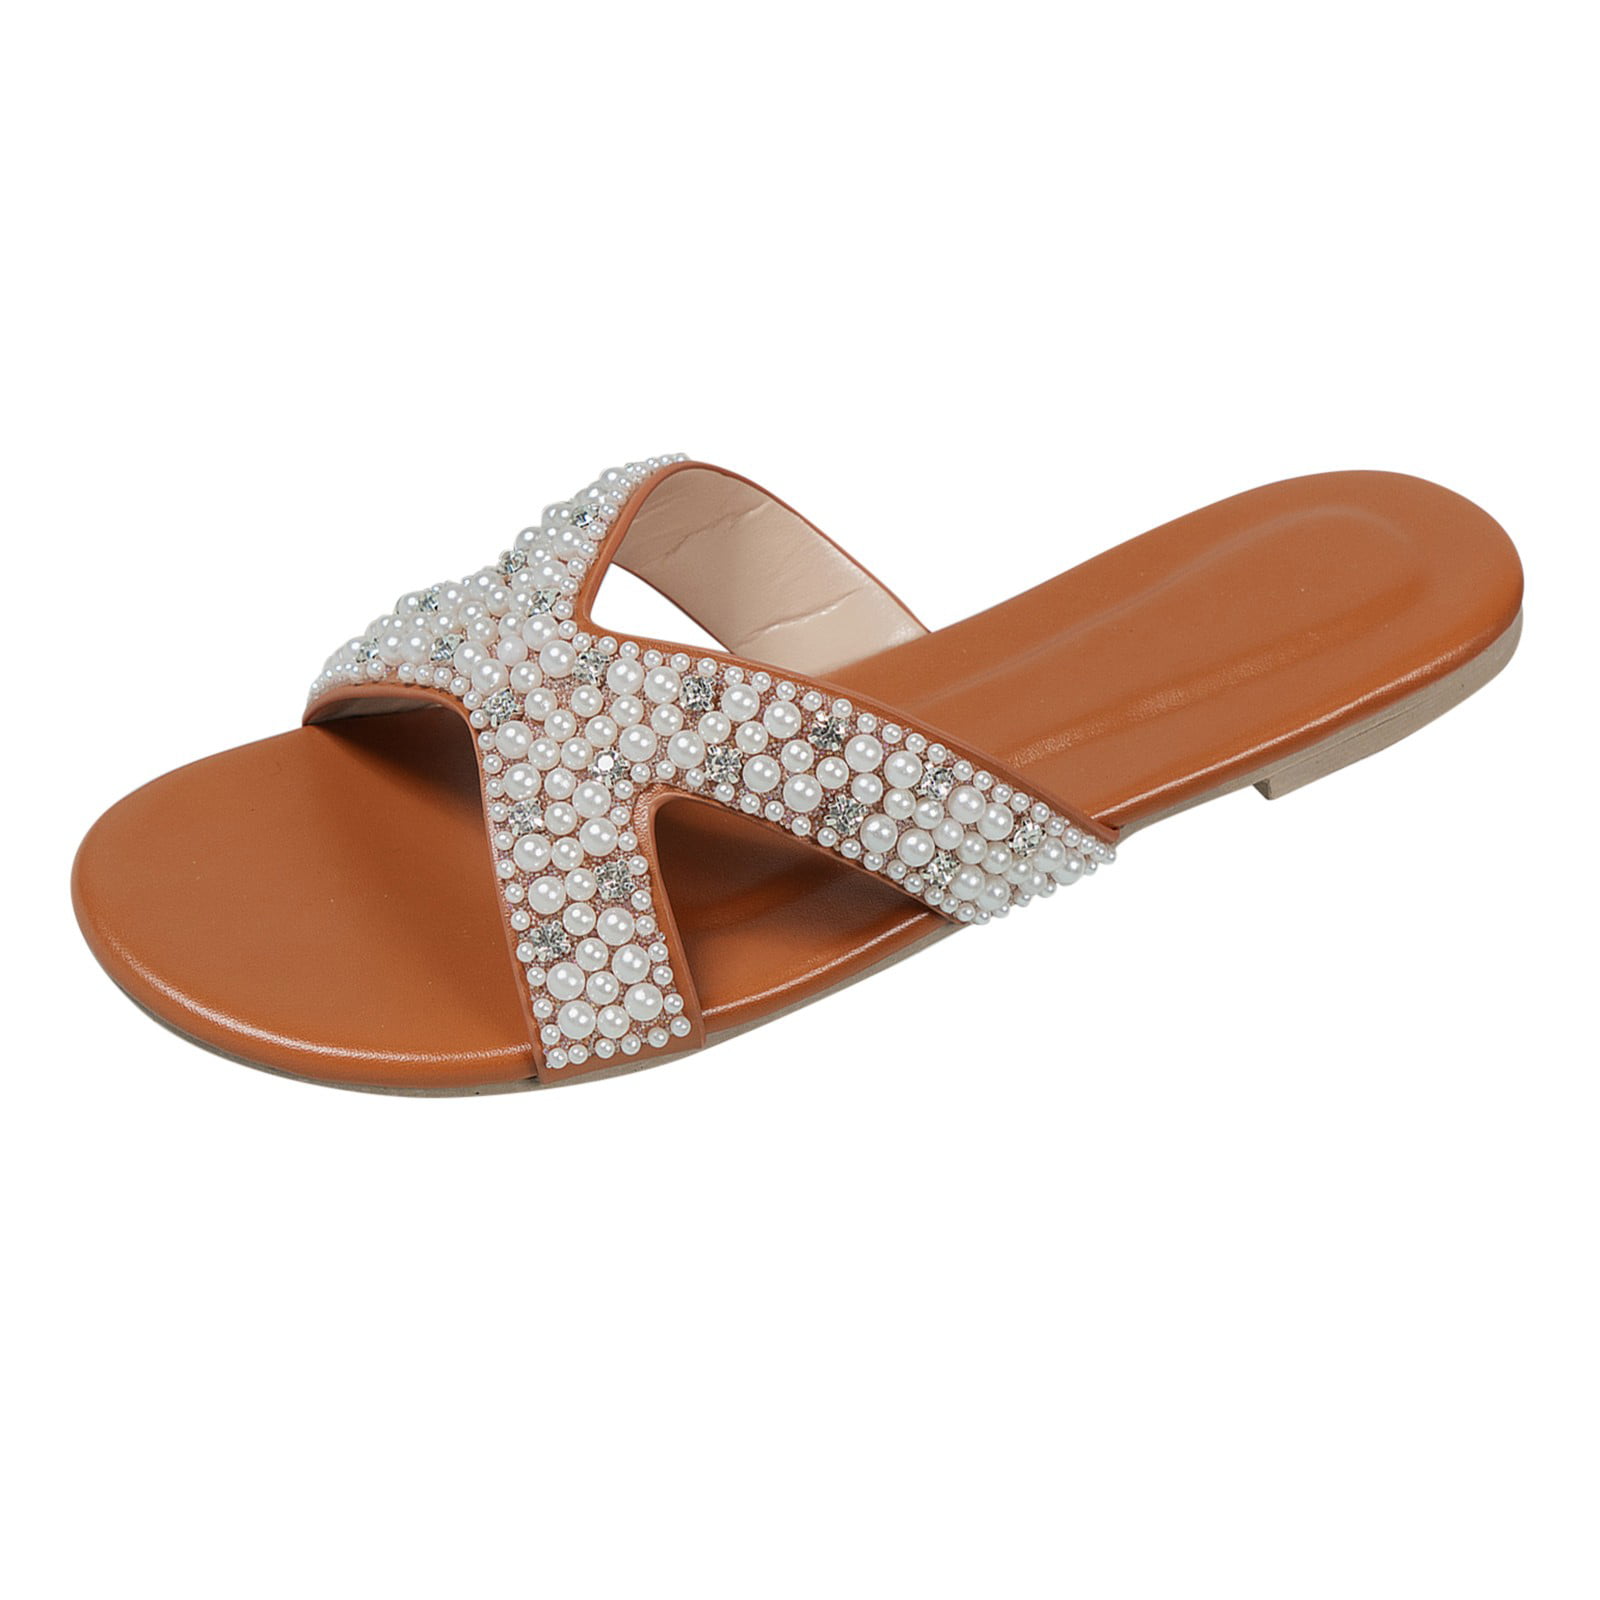 FAPIZI Boho Soft House Slippers Womens Flat Slides Sandals Sequin Flower Beach Platform Sliders Bath Slippers Shoes 